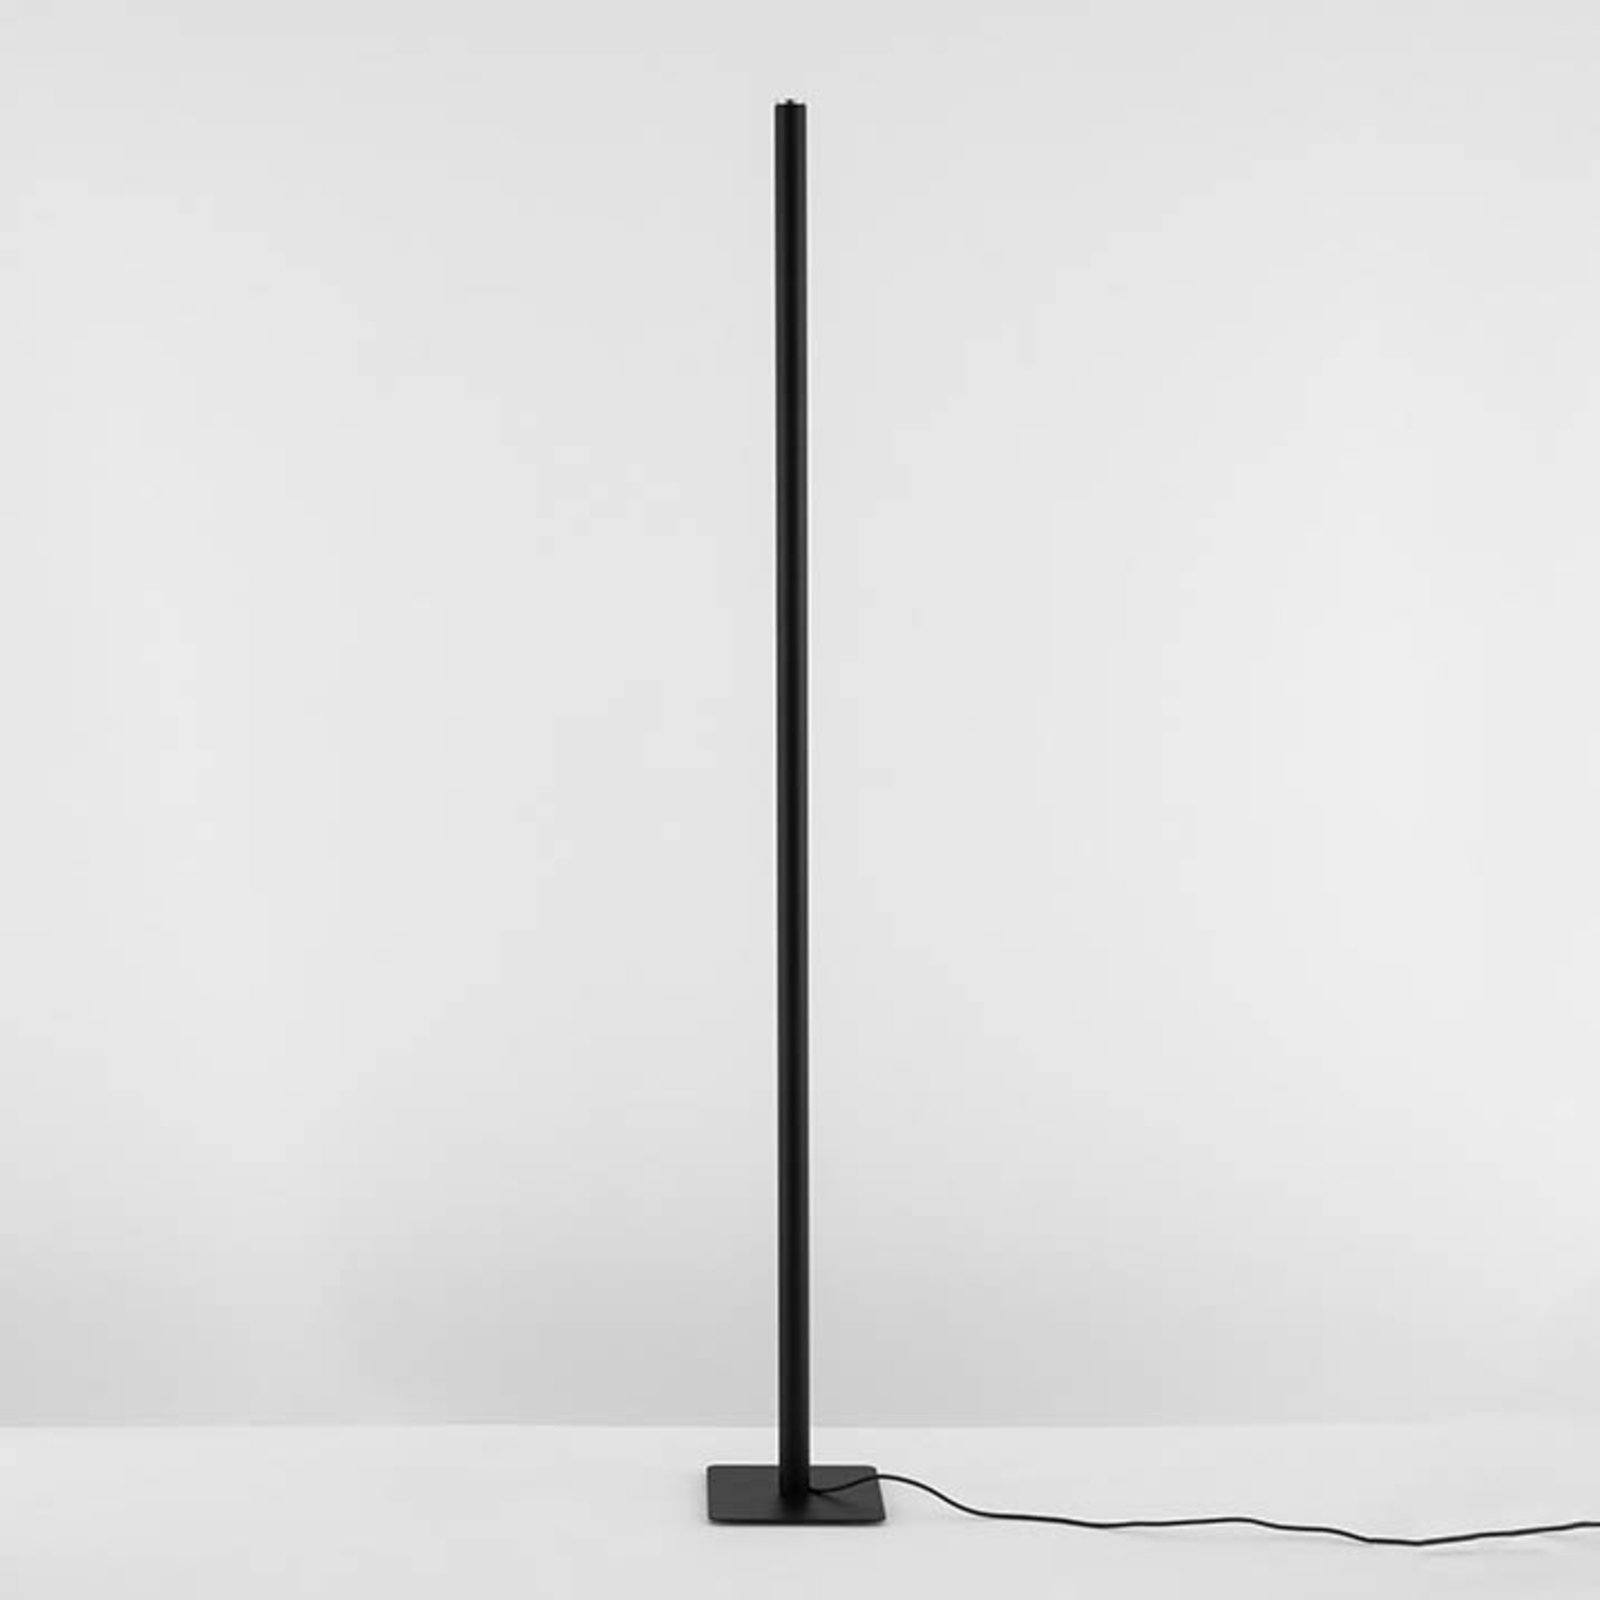 Artemide Ilio mini floor lamp app black 3,000 K